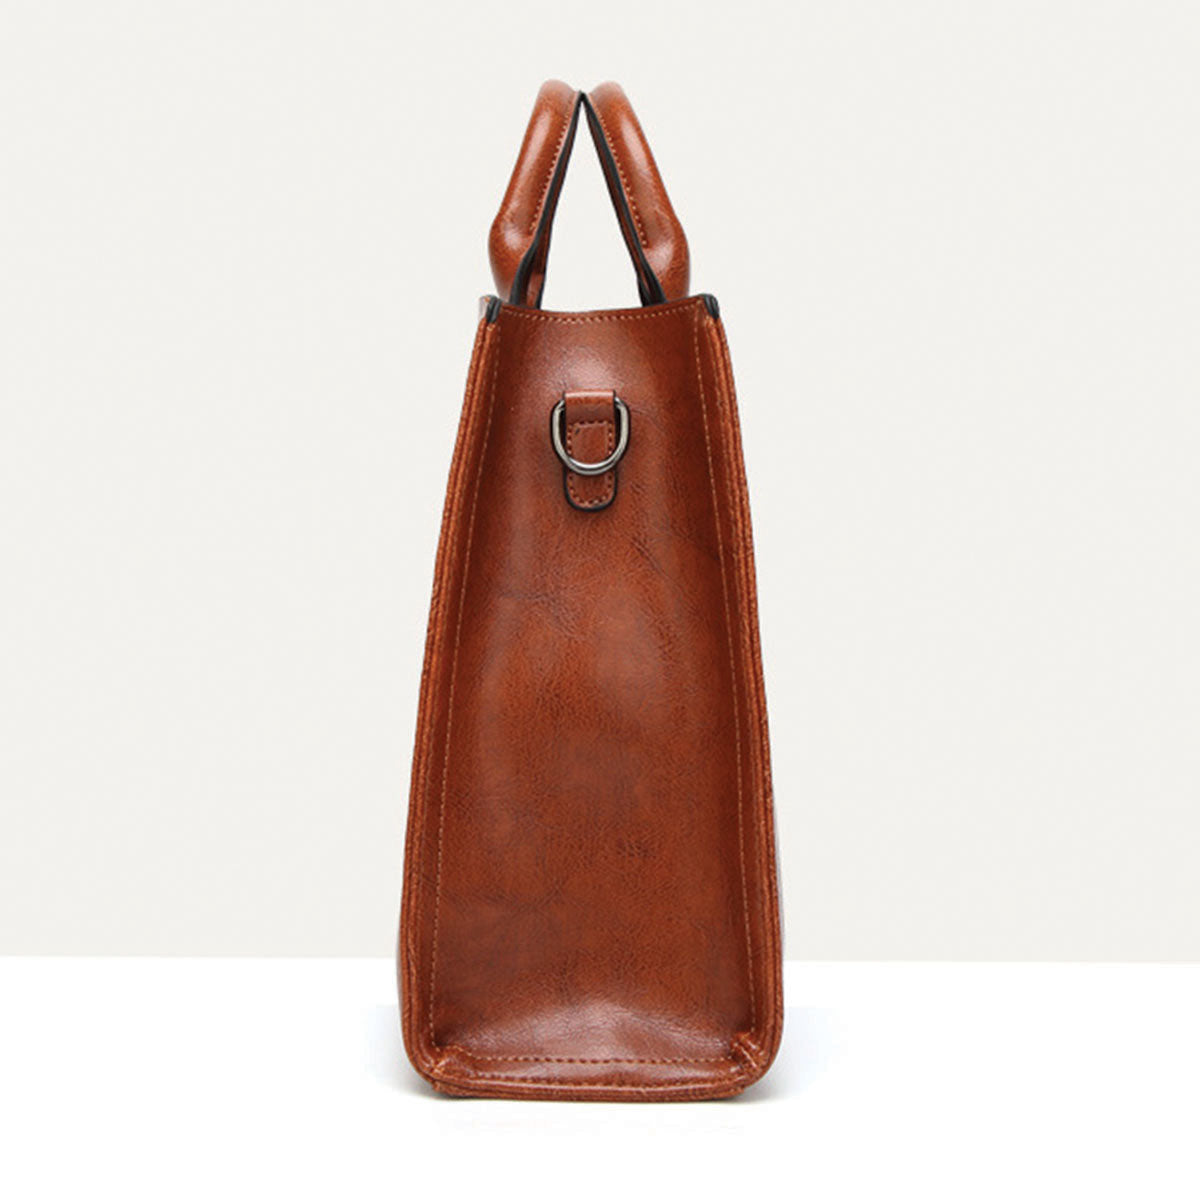 Your Best Companion - Husky Luxury Handbag V1